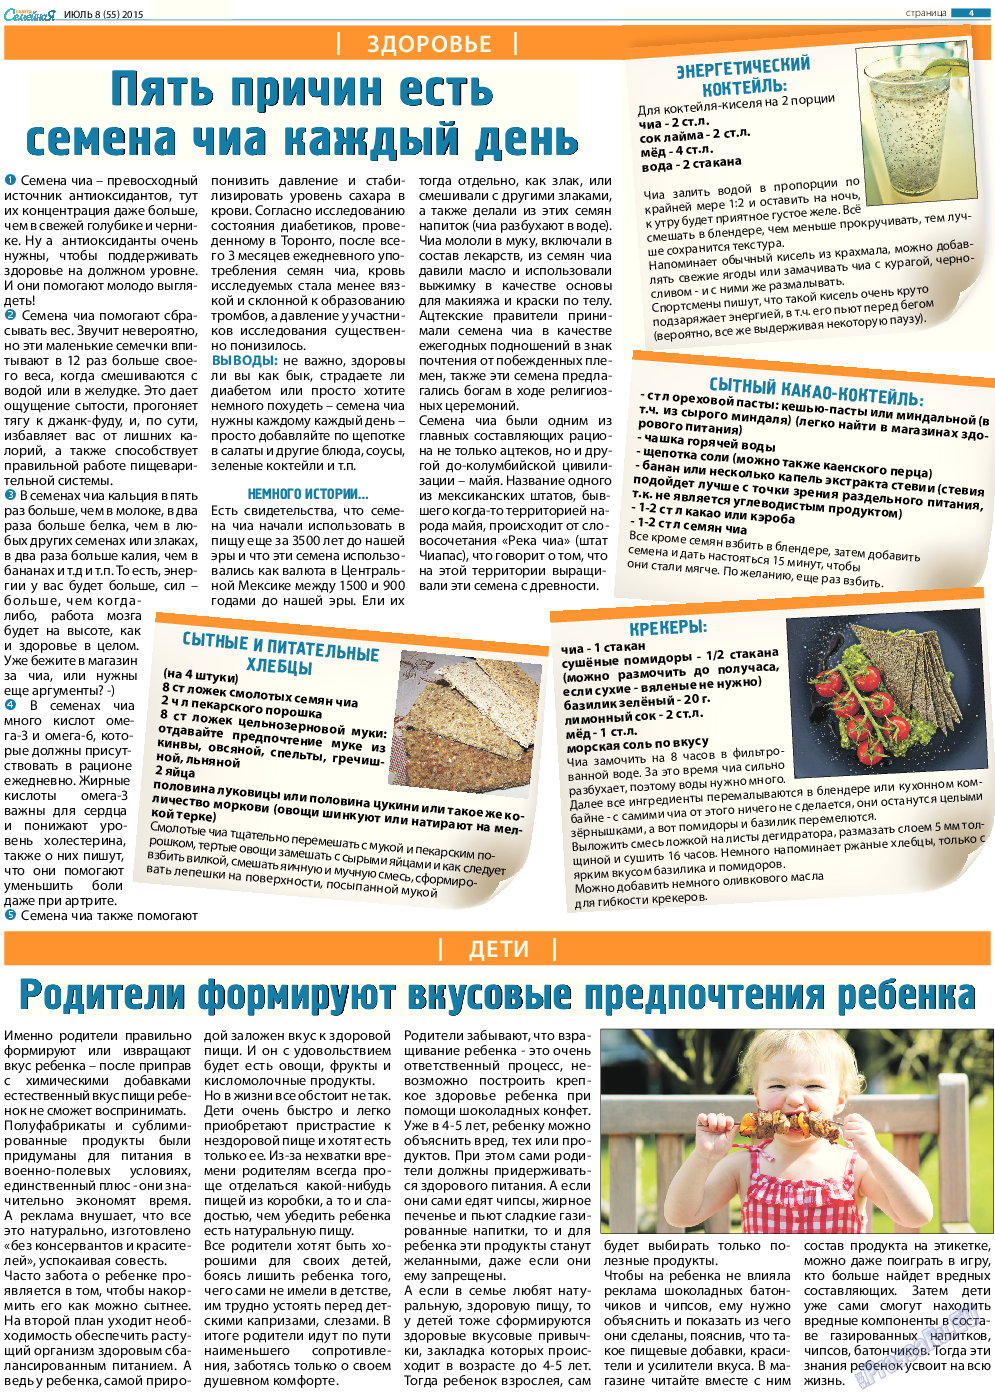 Семейная газета, газета. 2015 №8 стр.4